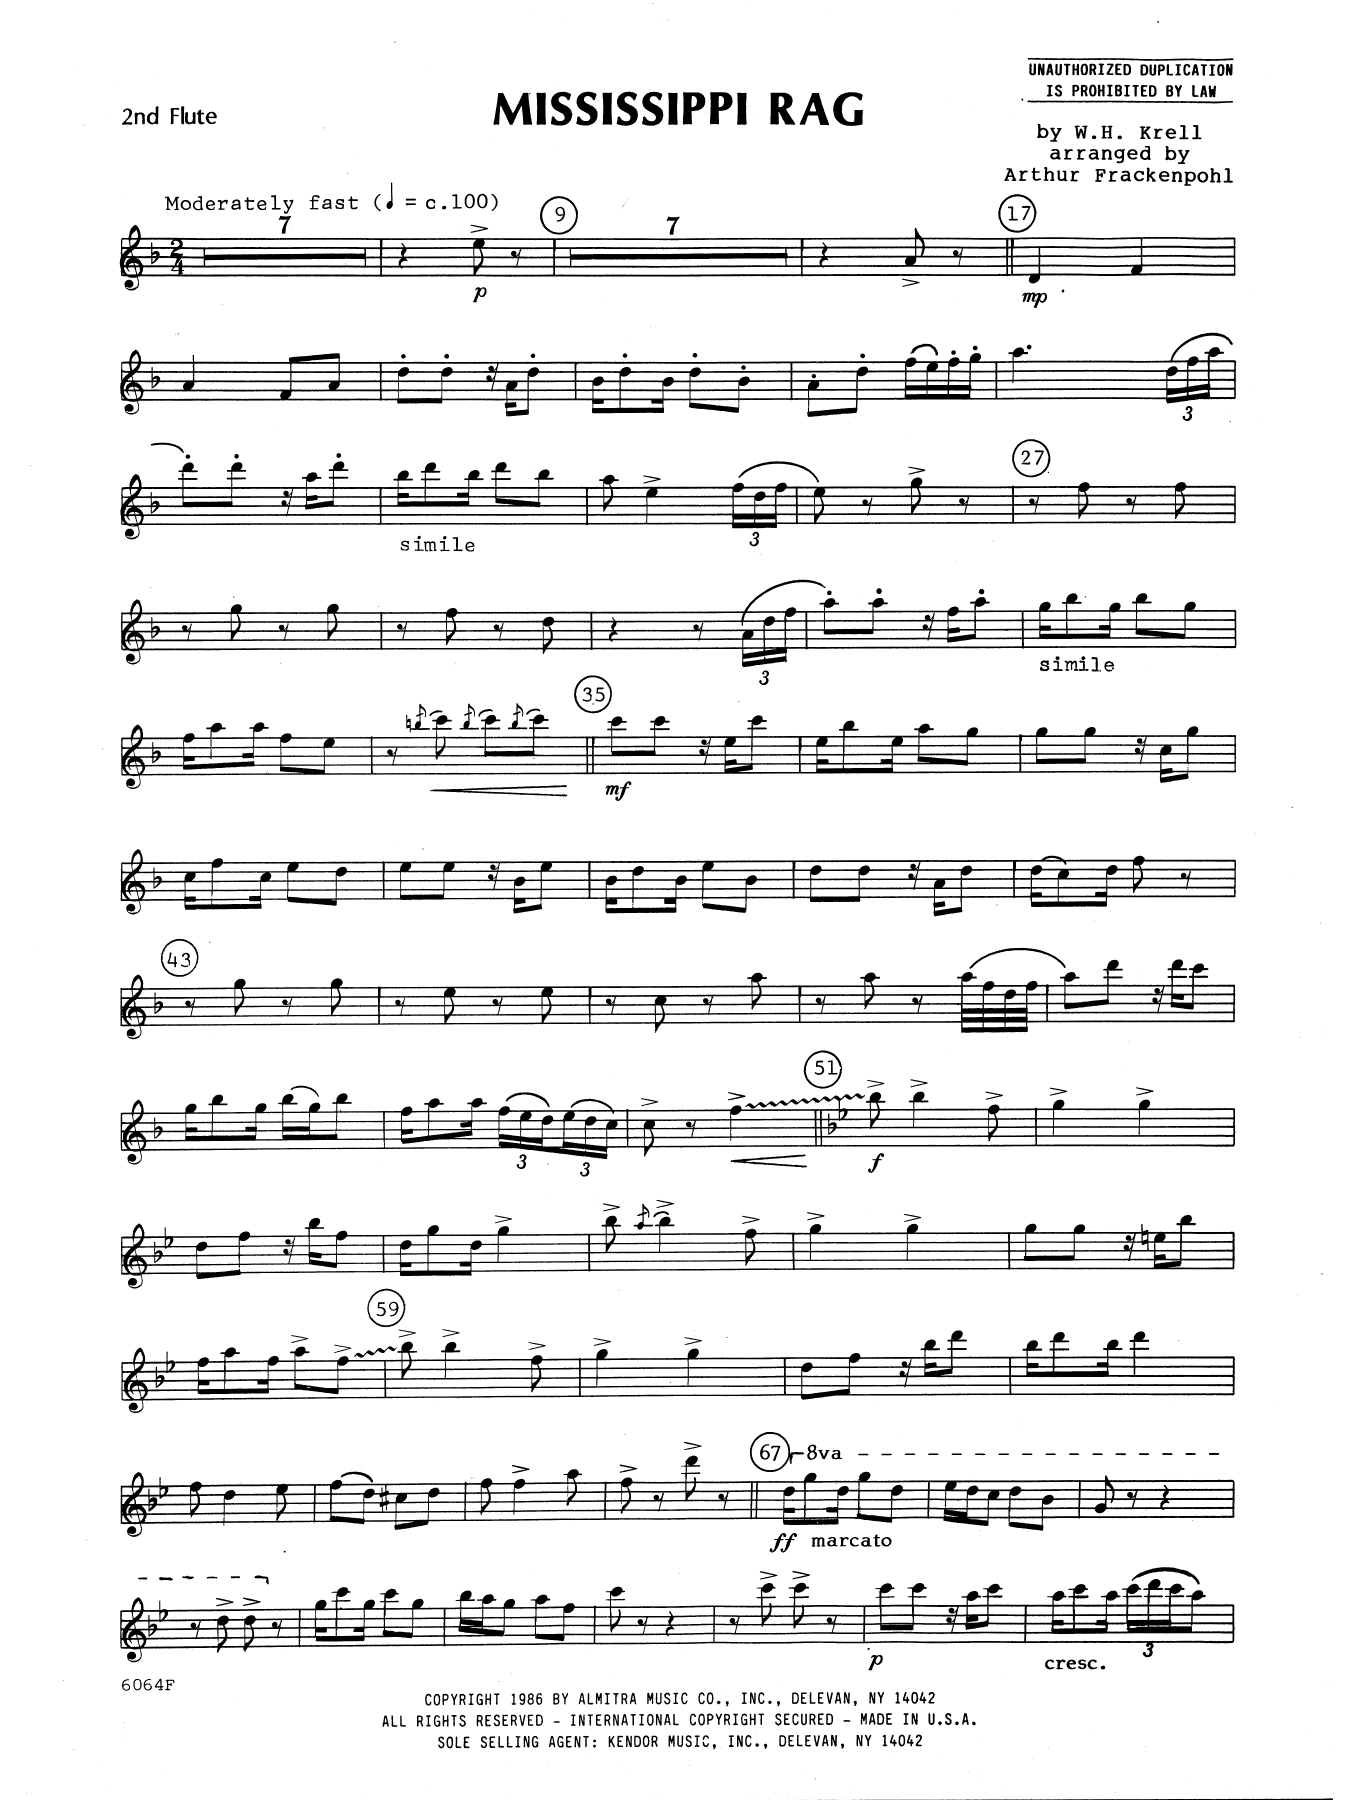 Download Arthur Frankenpohl Mississippi Rag - 2nd Flute Sheet Music